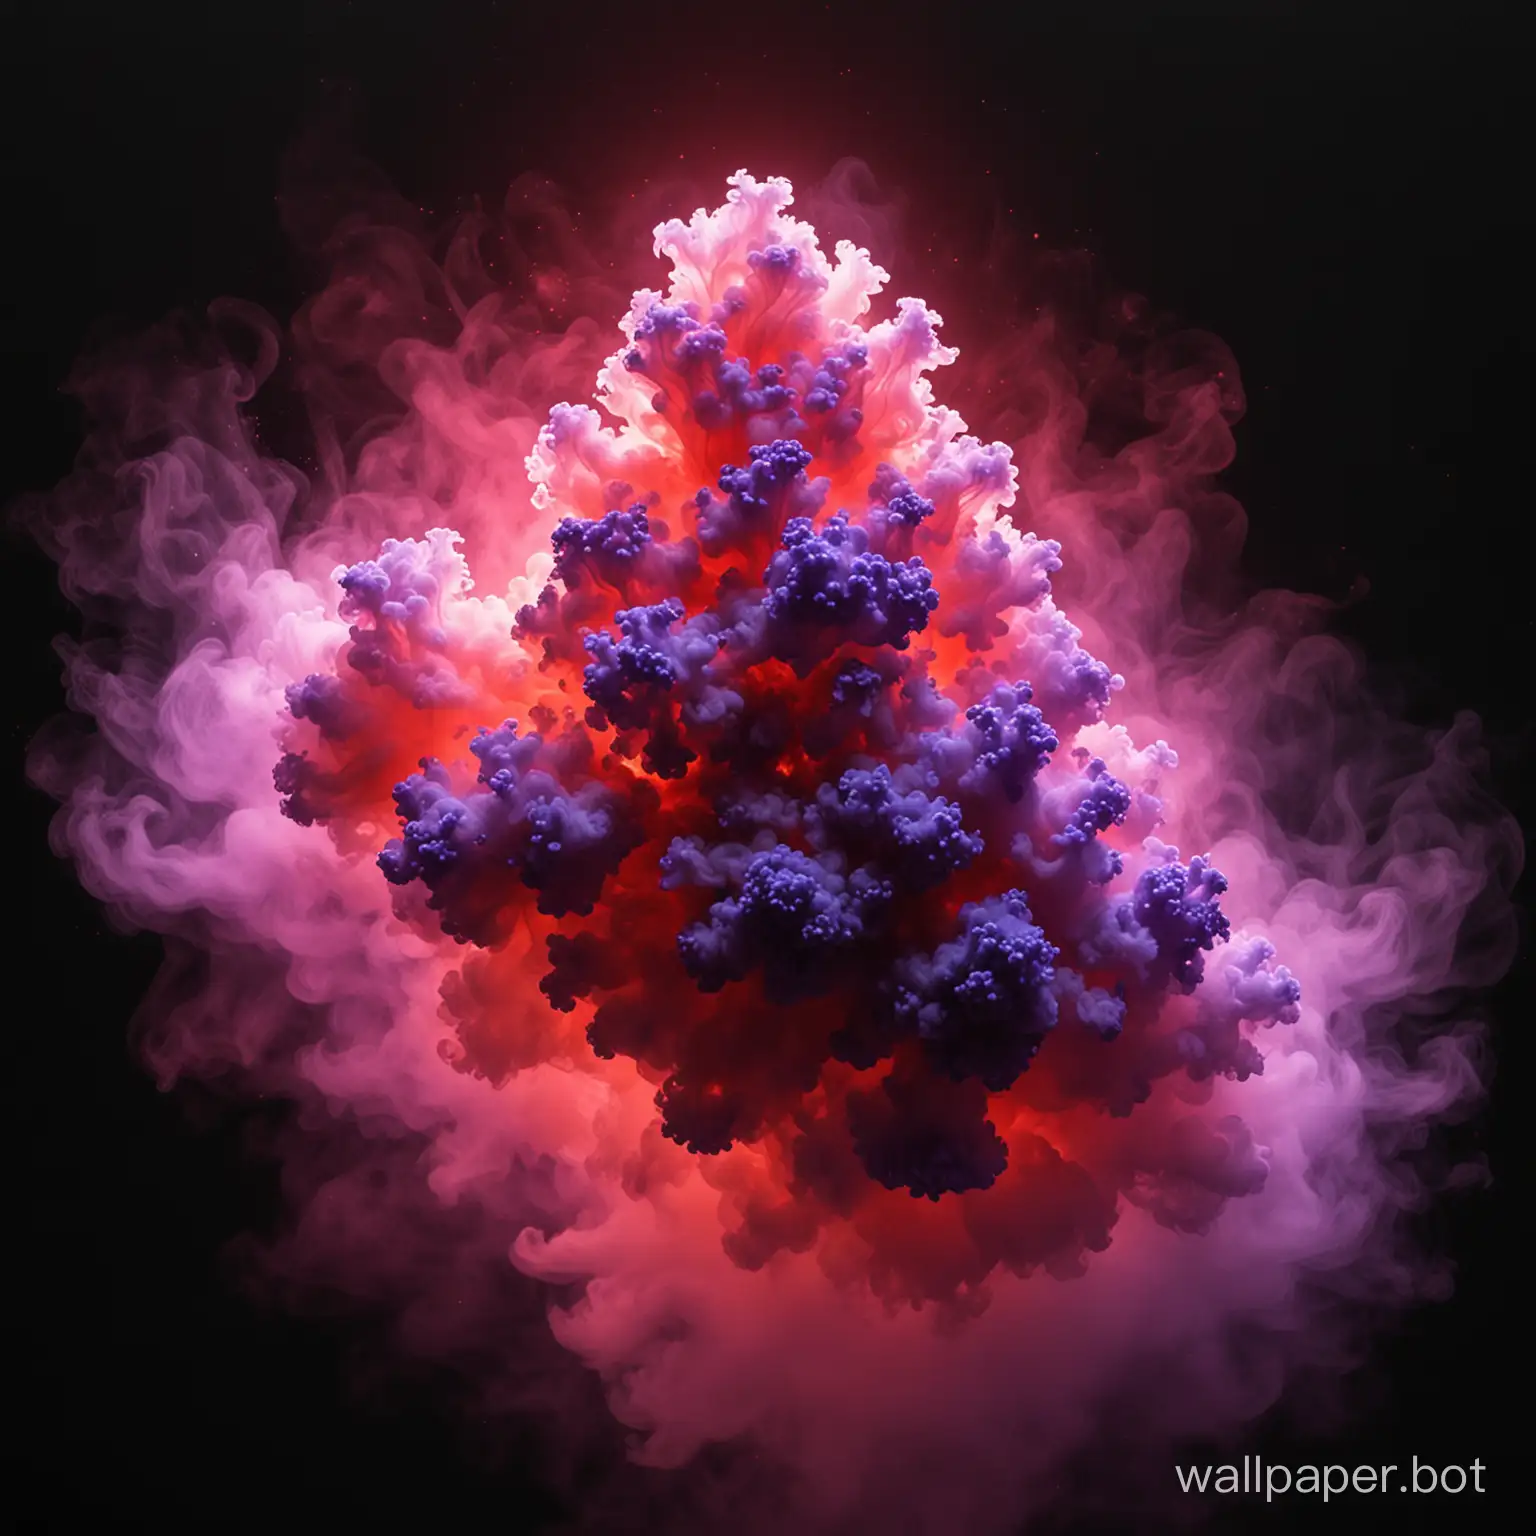 Enigmatic-Violet-Mist-Enveloped-in-Crimson-Glow-Against-a-Dark-Abyss